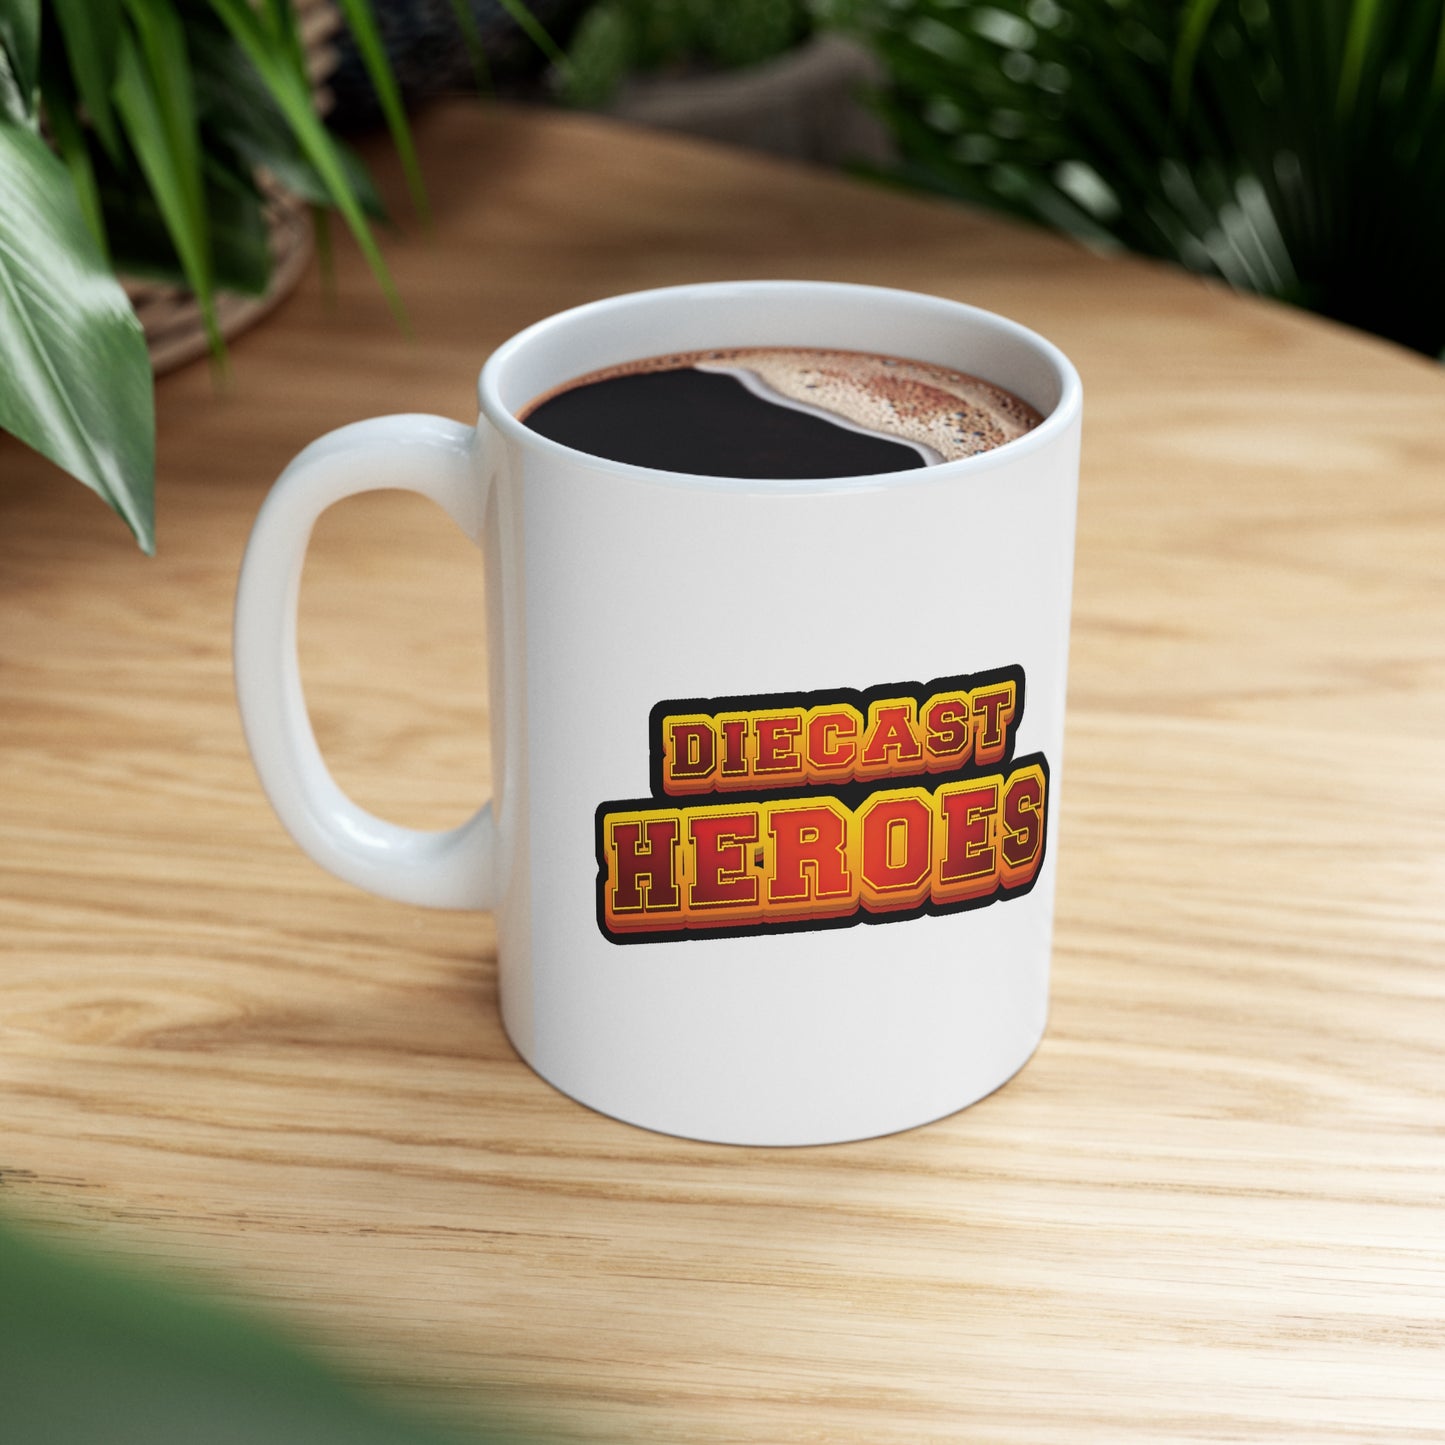 Official DIECAST HEROES 11oz White Mug